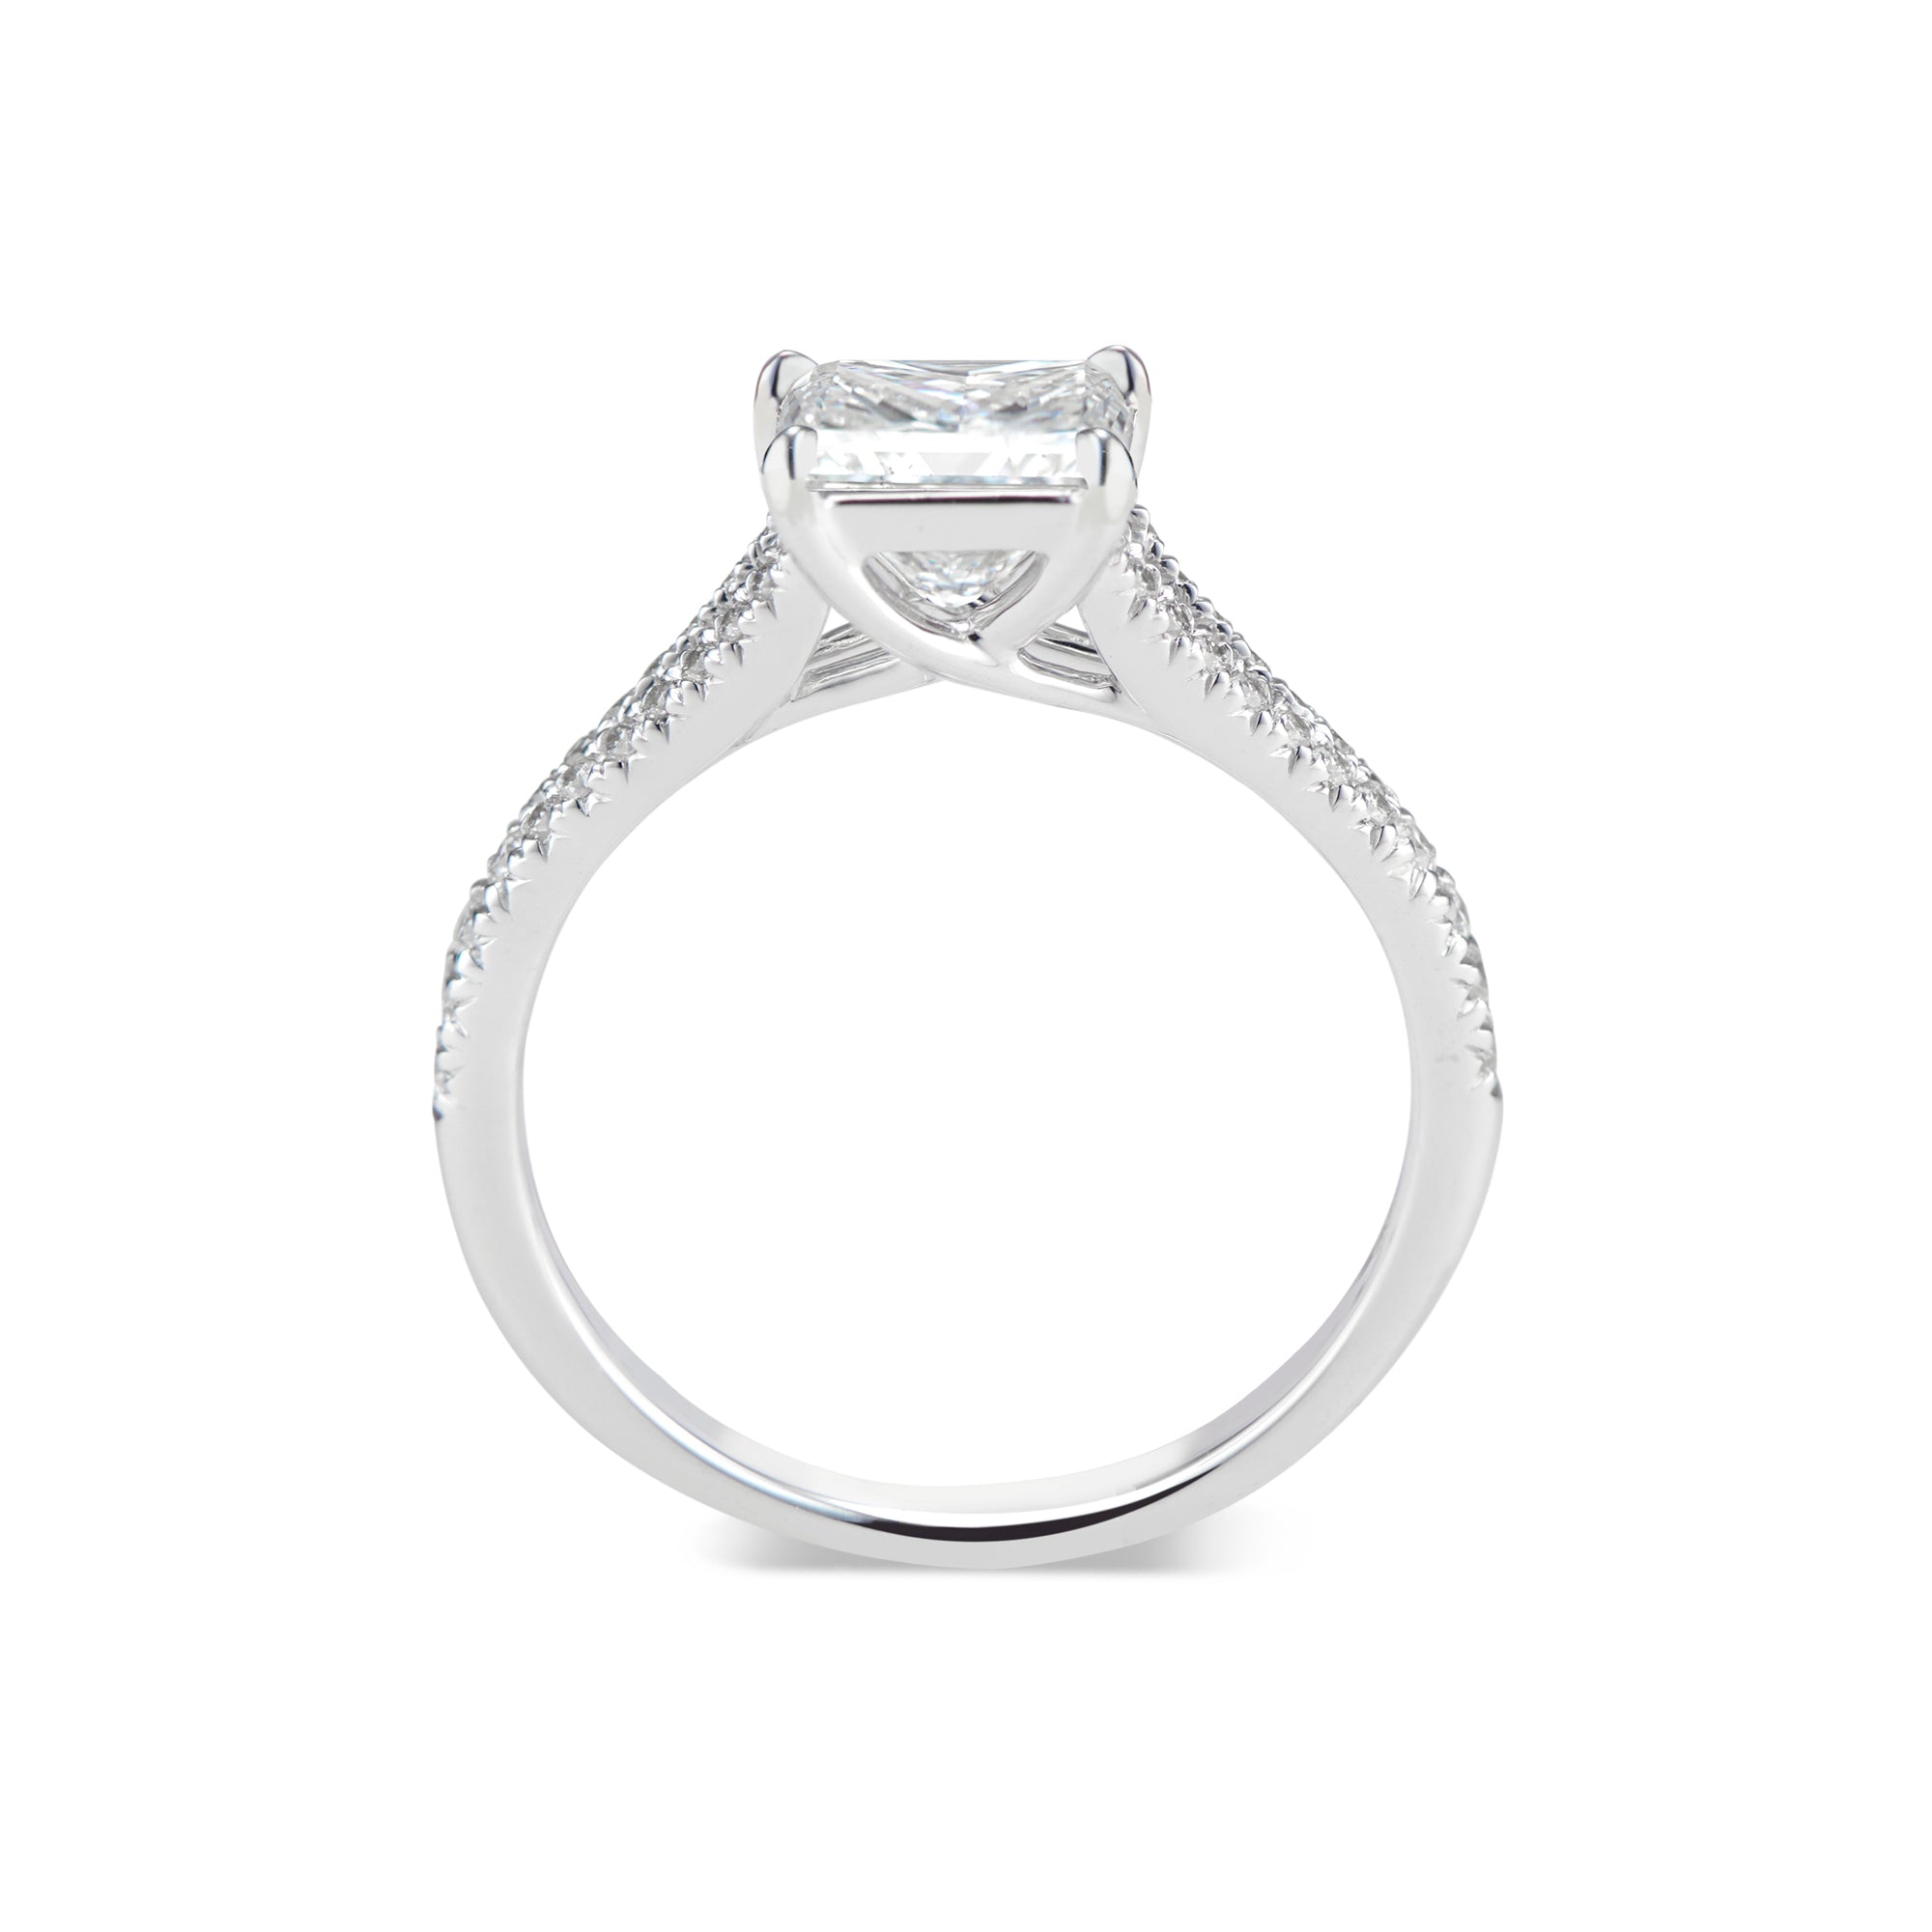 Princess Cut Diamond Engagement Ring with Split Shank  -18K weighting 3.23 GR  - 40 round diamonds totaling 0.21 carats